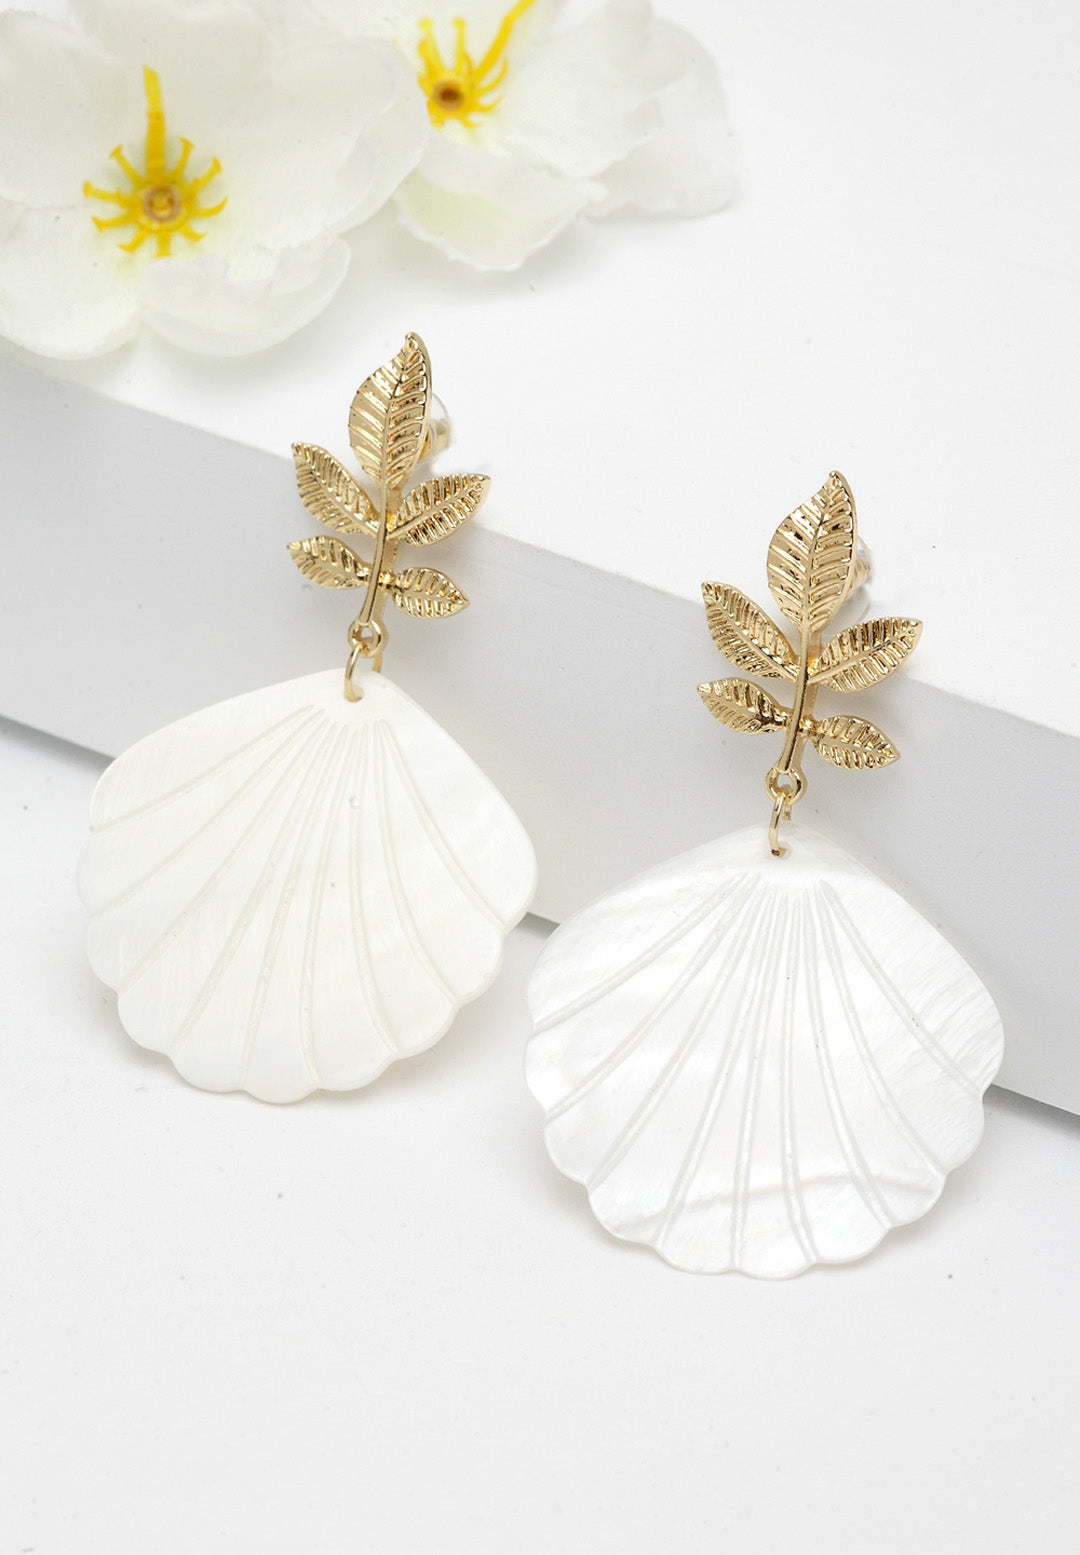 Avant-Garde Paris Modish Gold-Plated Shell Earrings